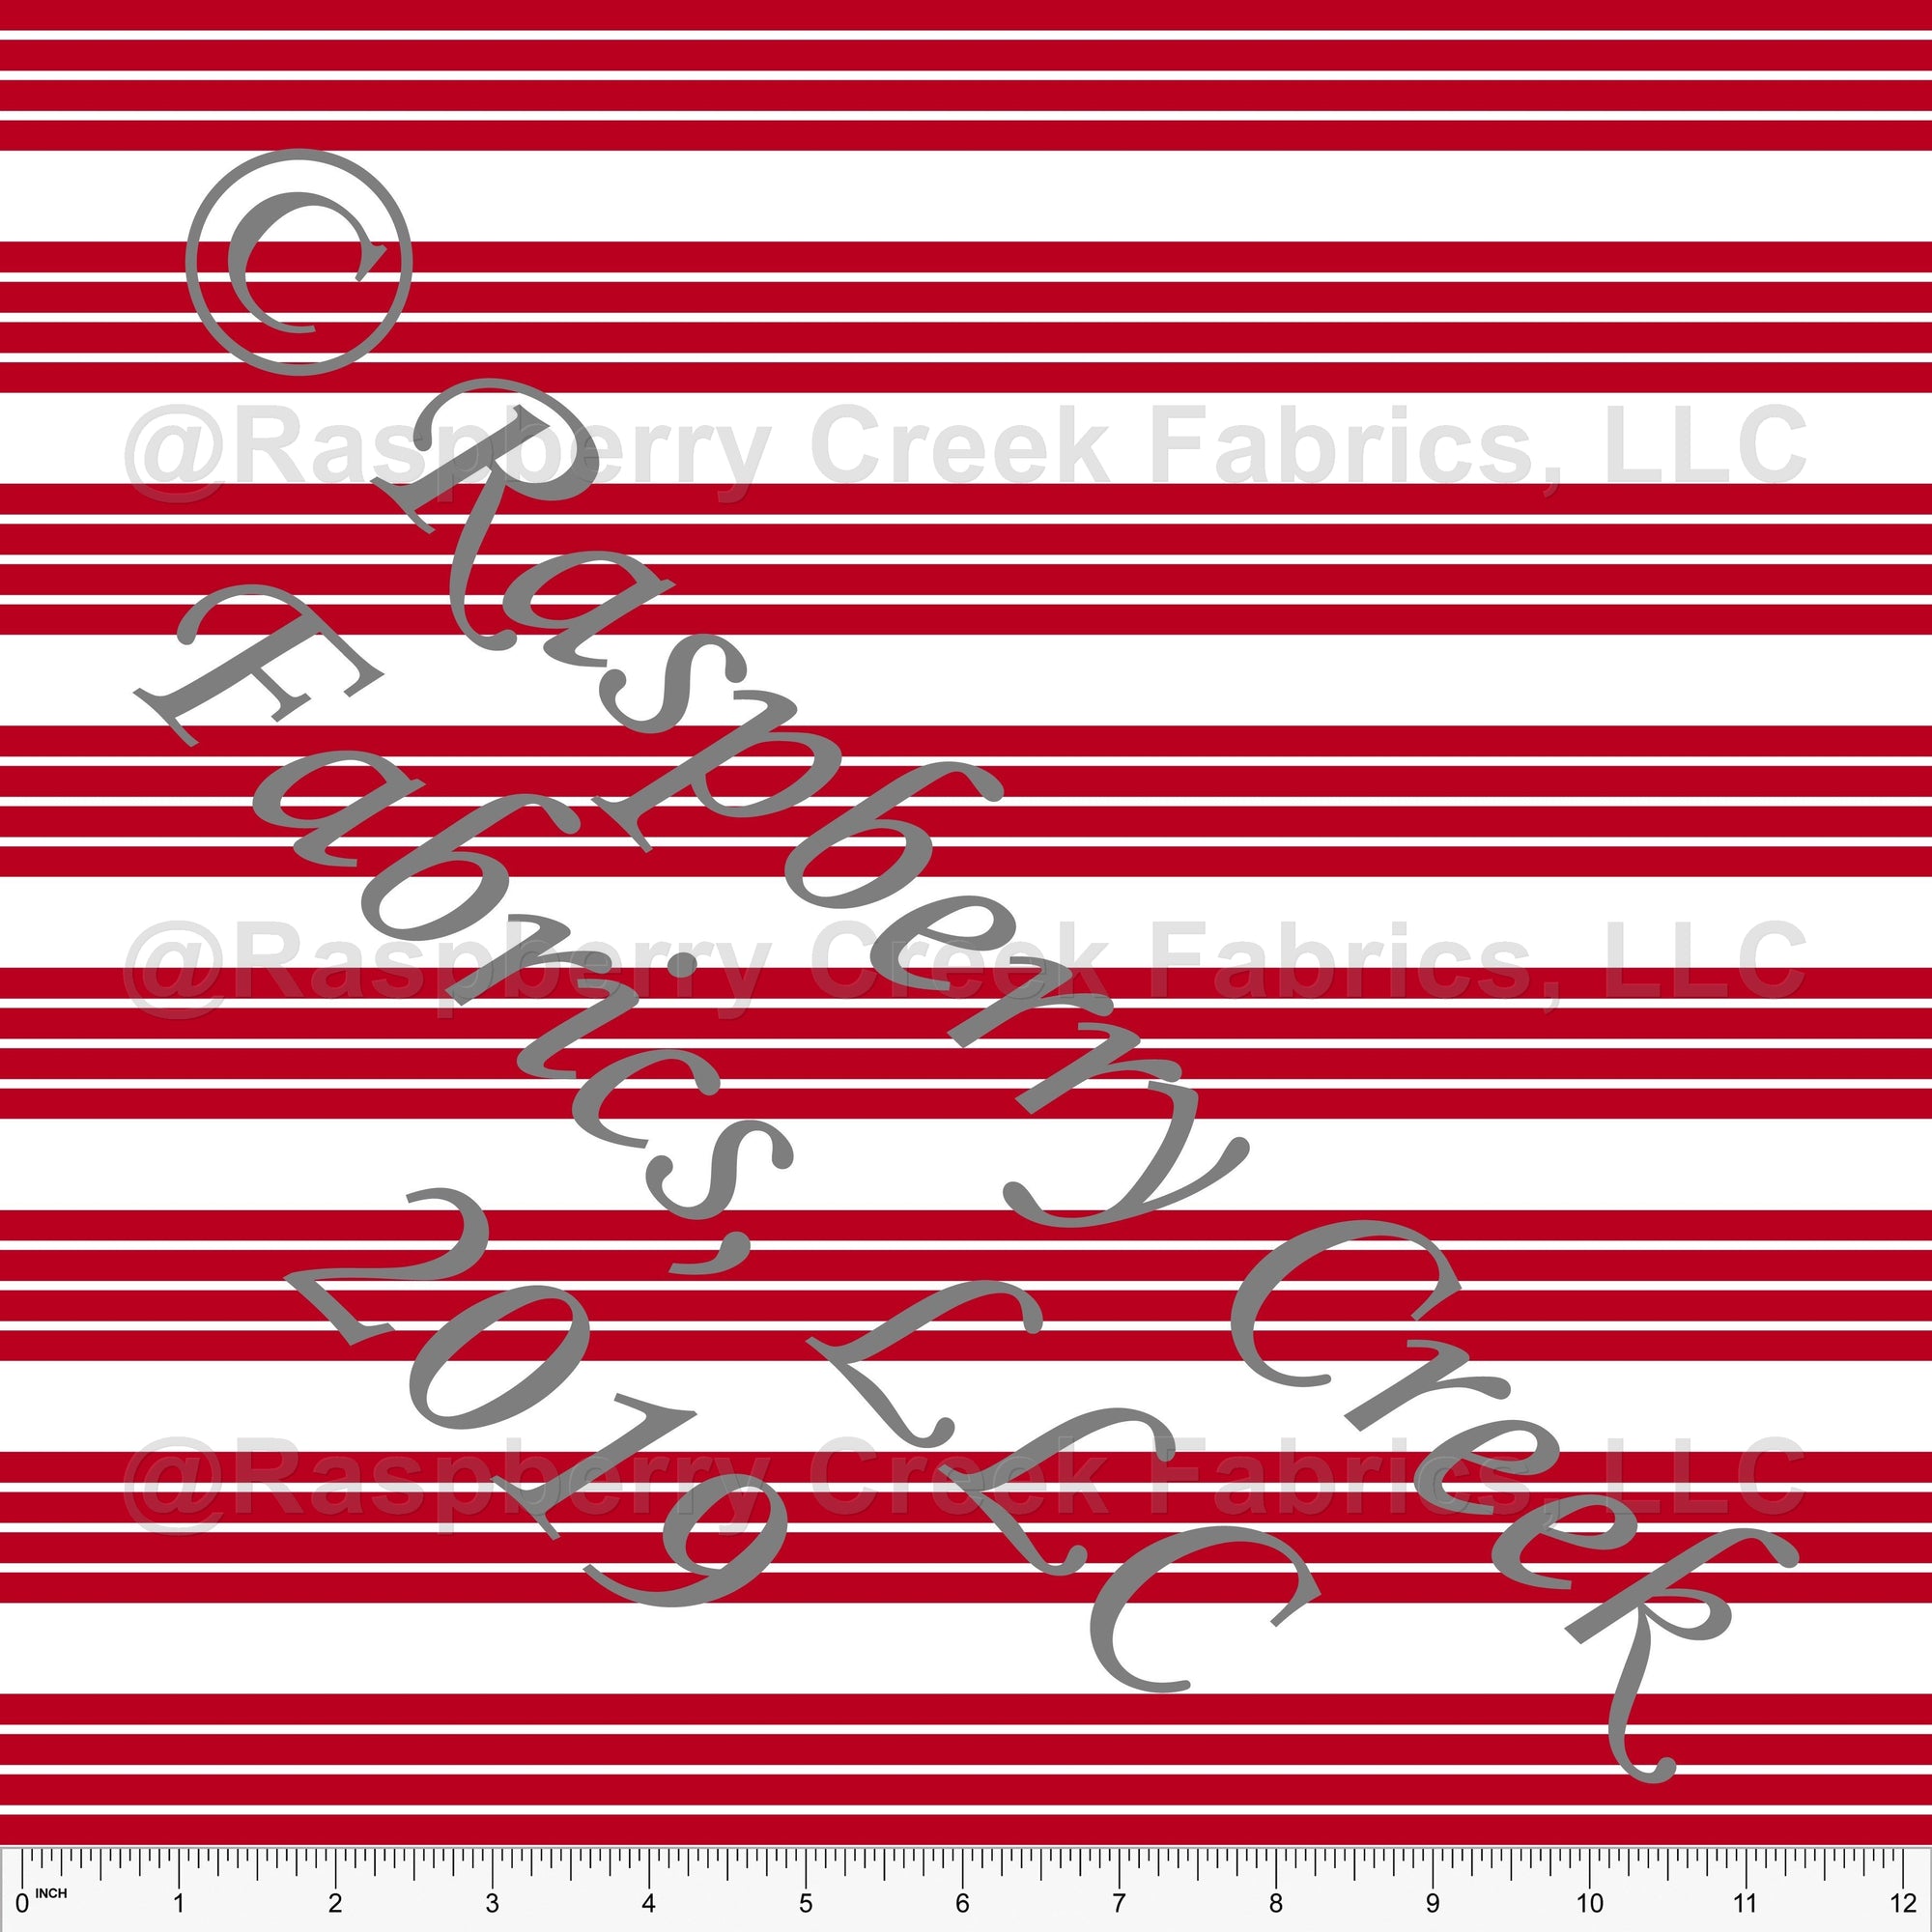 Red and White Stripe Print Fabric, Club Fabrics Fabric, Raspberry Creek Fabrics, watermarked